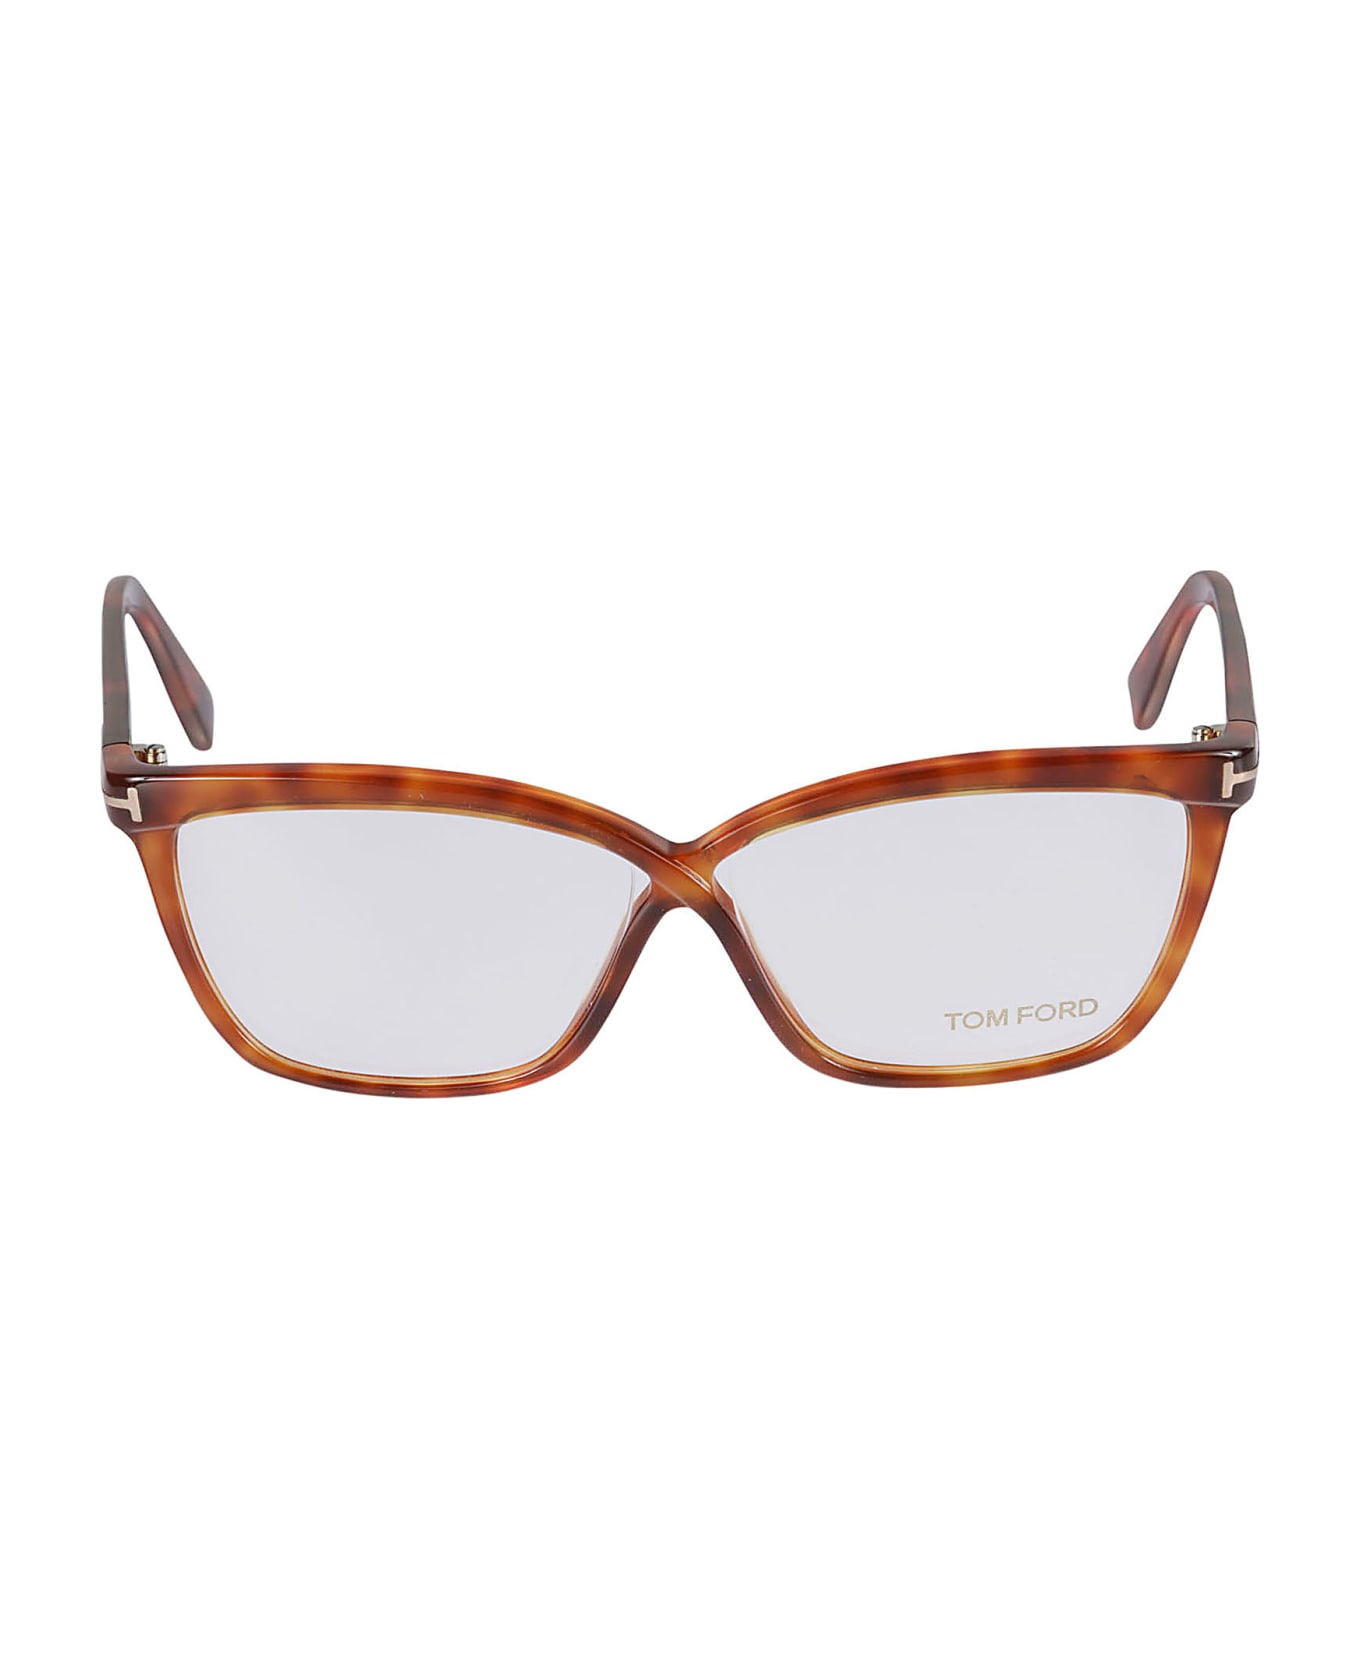 Tom Ford Eyewear Cross-bridge Clear Lens Glasses - 053